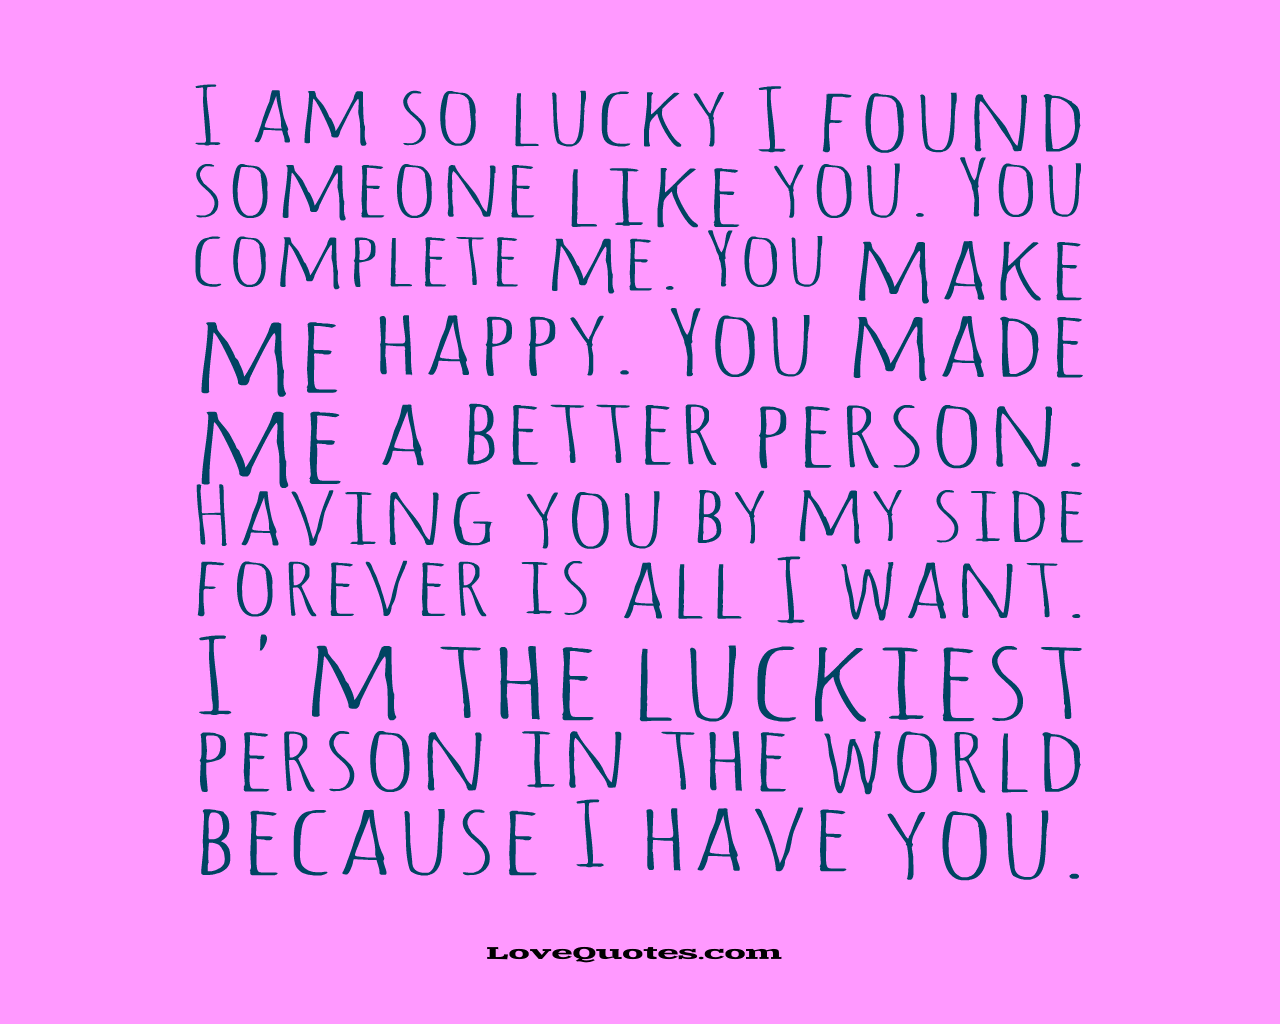 Lucky I Found You